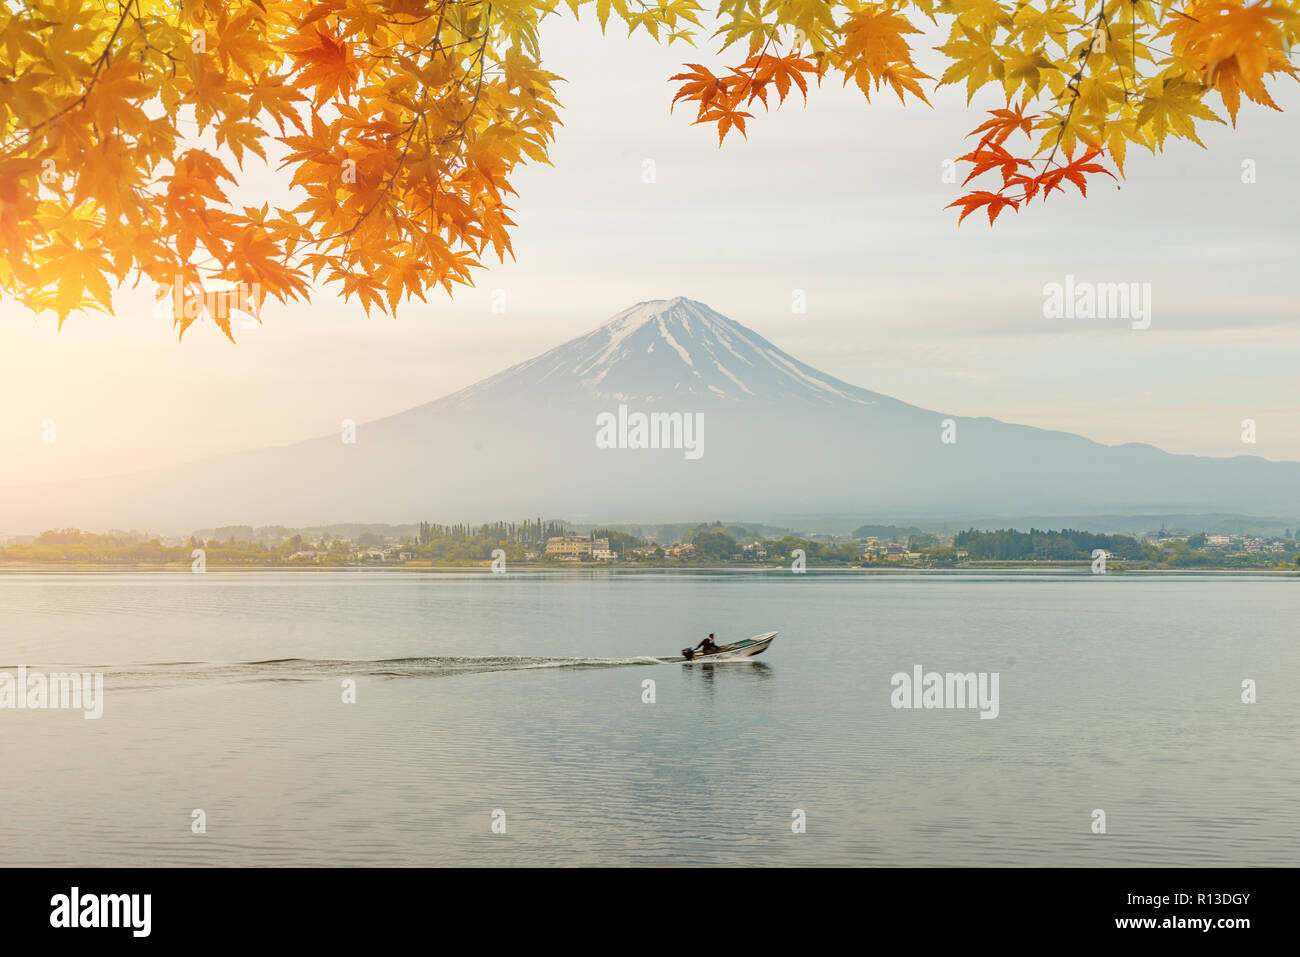 Autumn season and mountain Fuji in morning with red leaves maple at lake Kawaguchi, Japan. Autumn season in Japan. Stock Photo